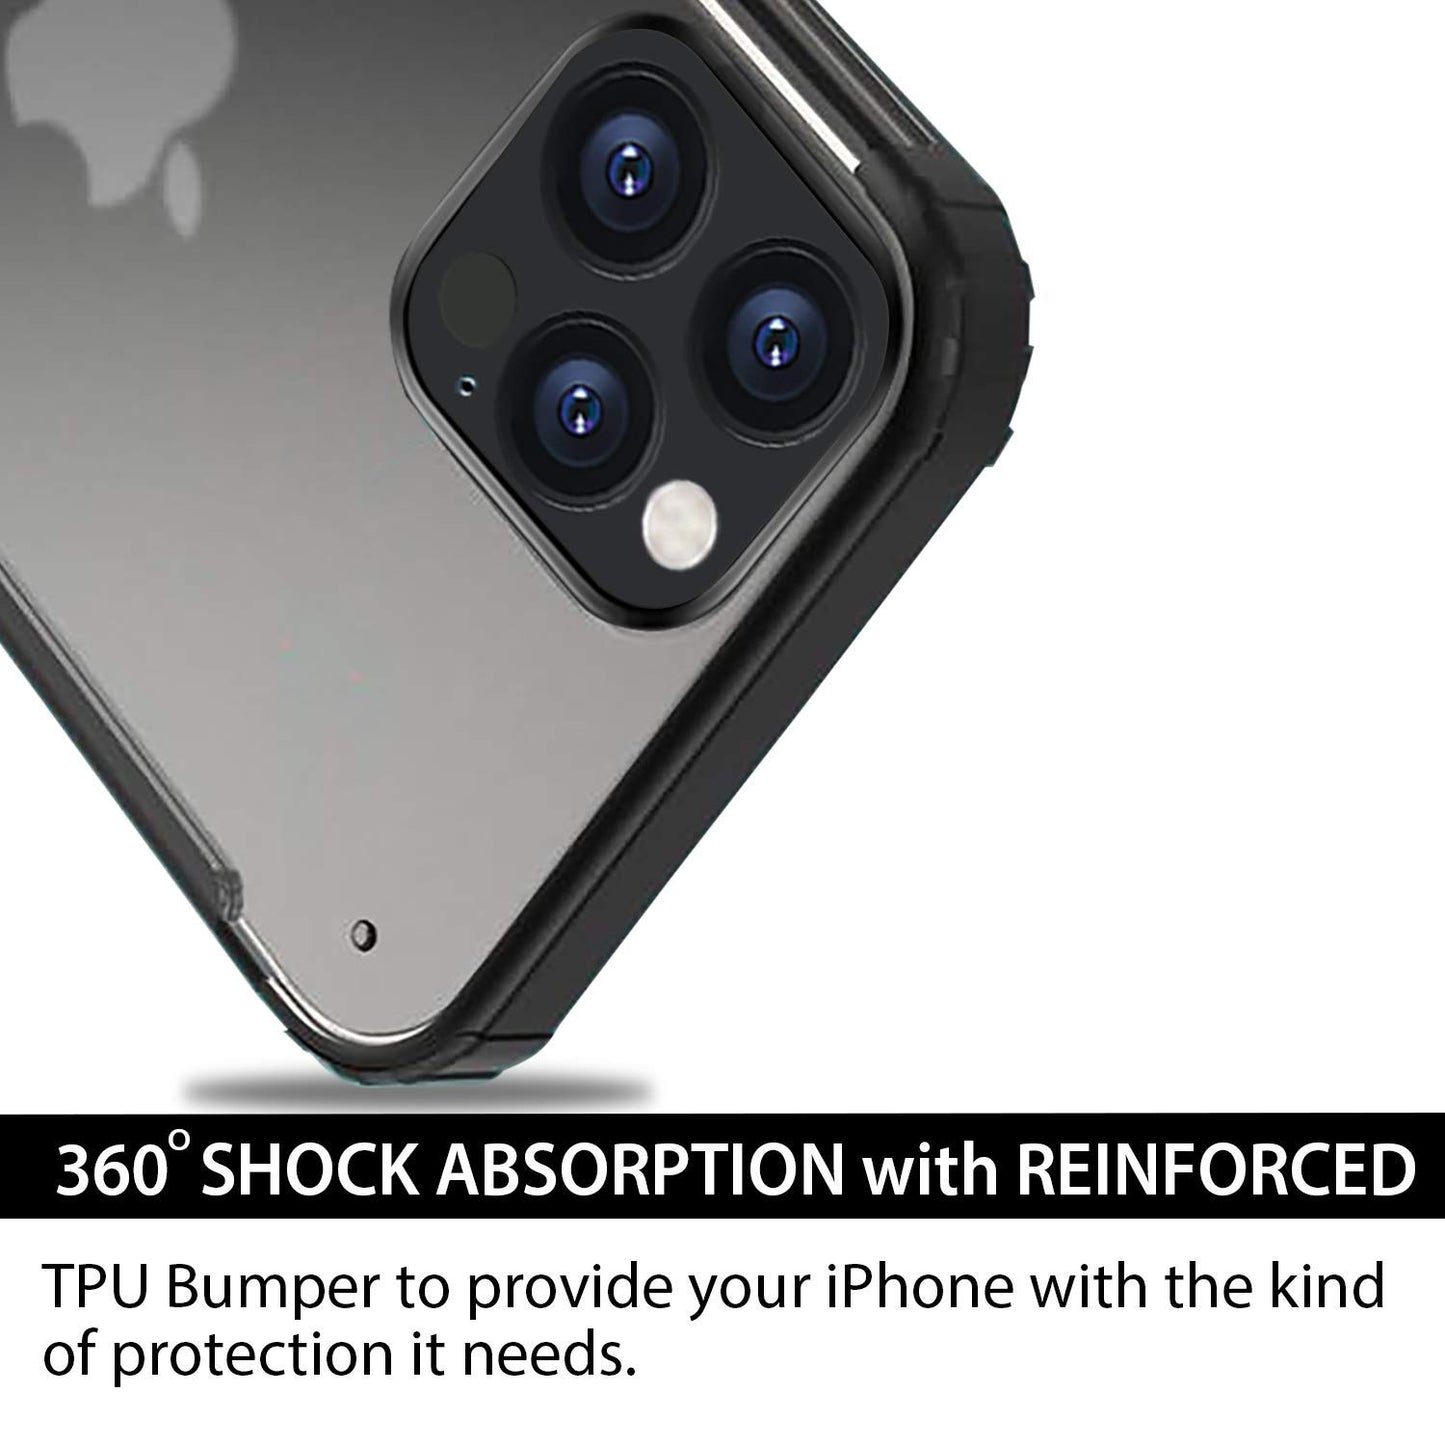 GRIPP Amaze Pro Translucent Matte Back Case for iPhone 12 Pro Max - Black